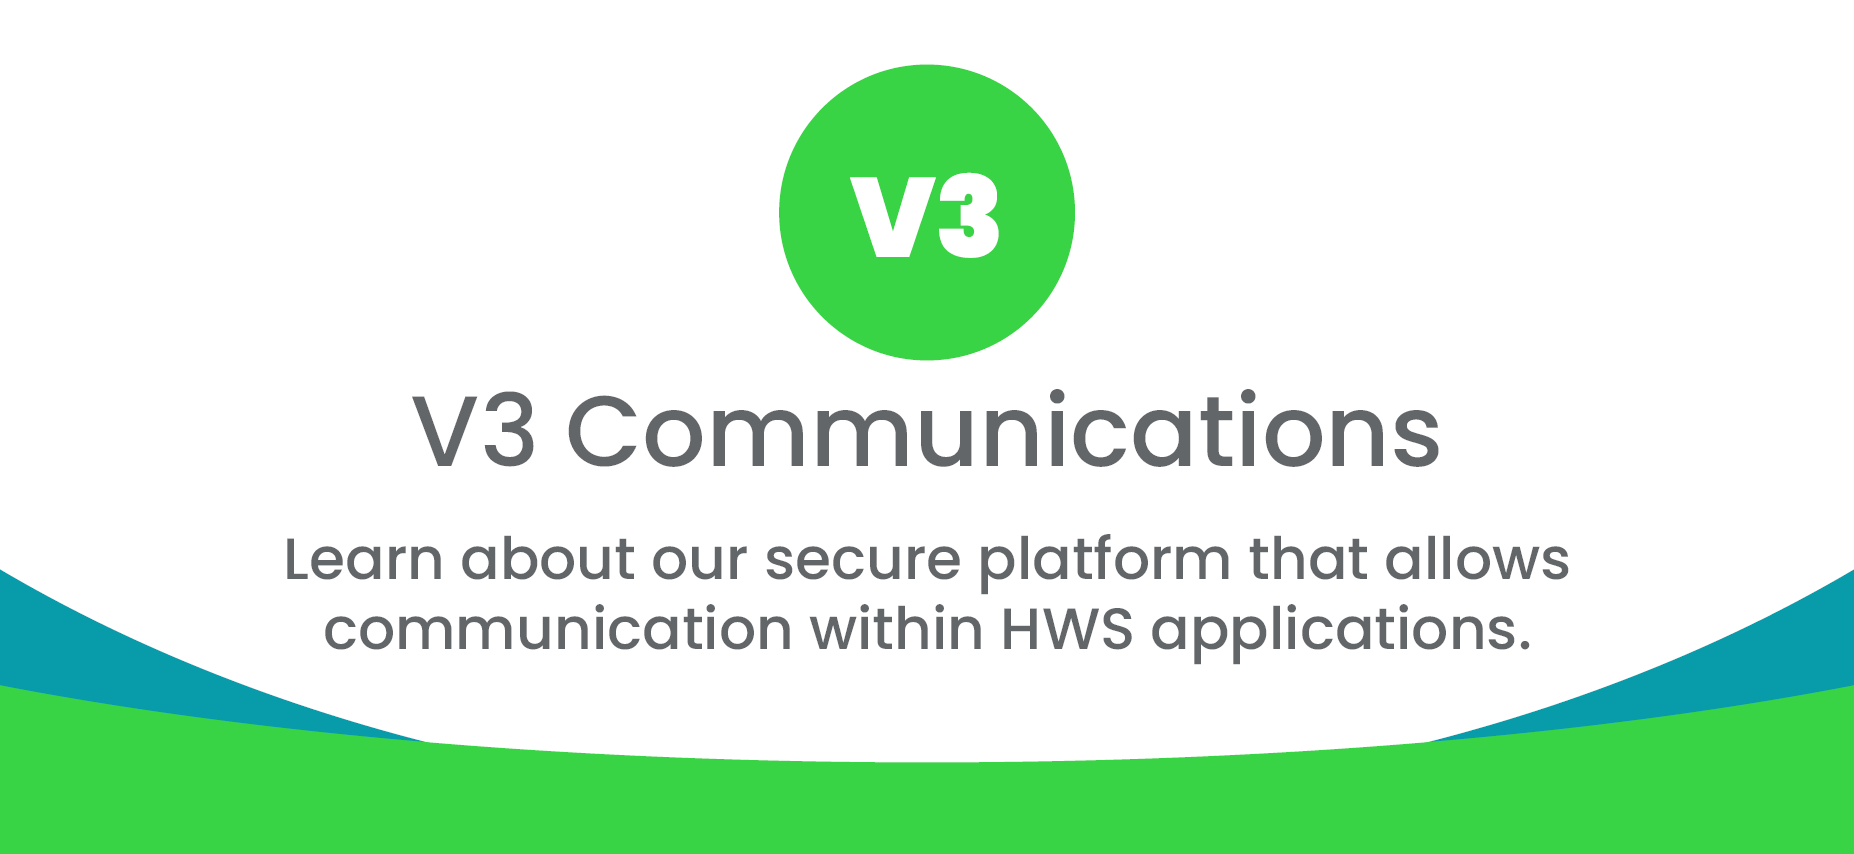 V3 Communications